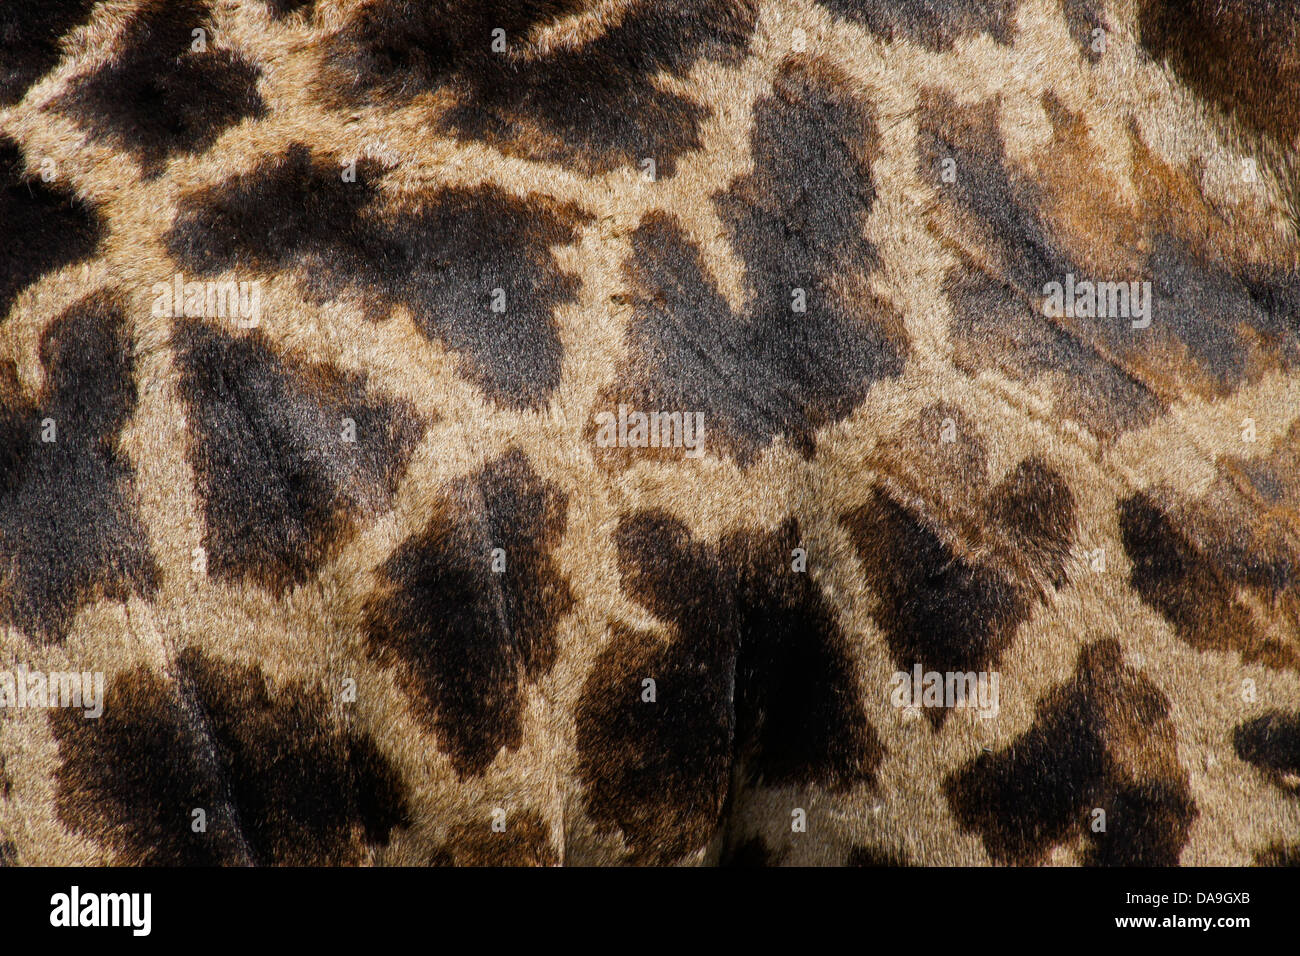 Coat pattern of Masai giraffe, Kenya Stock Photo